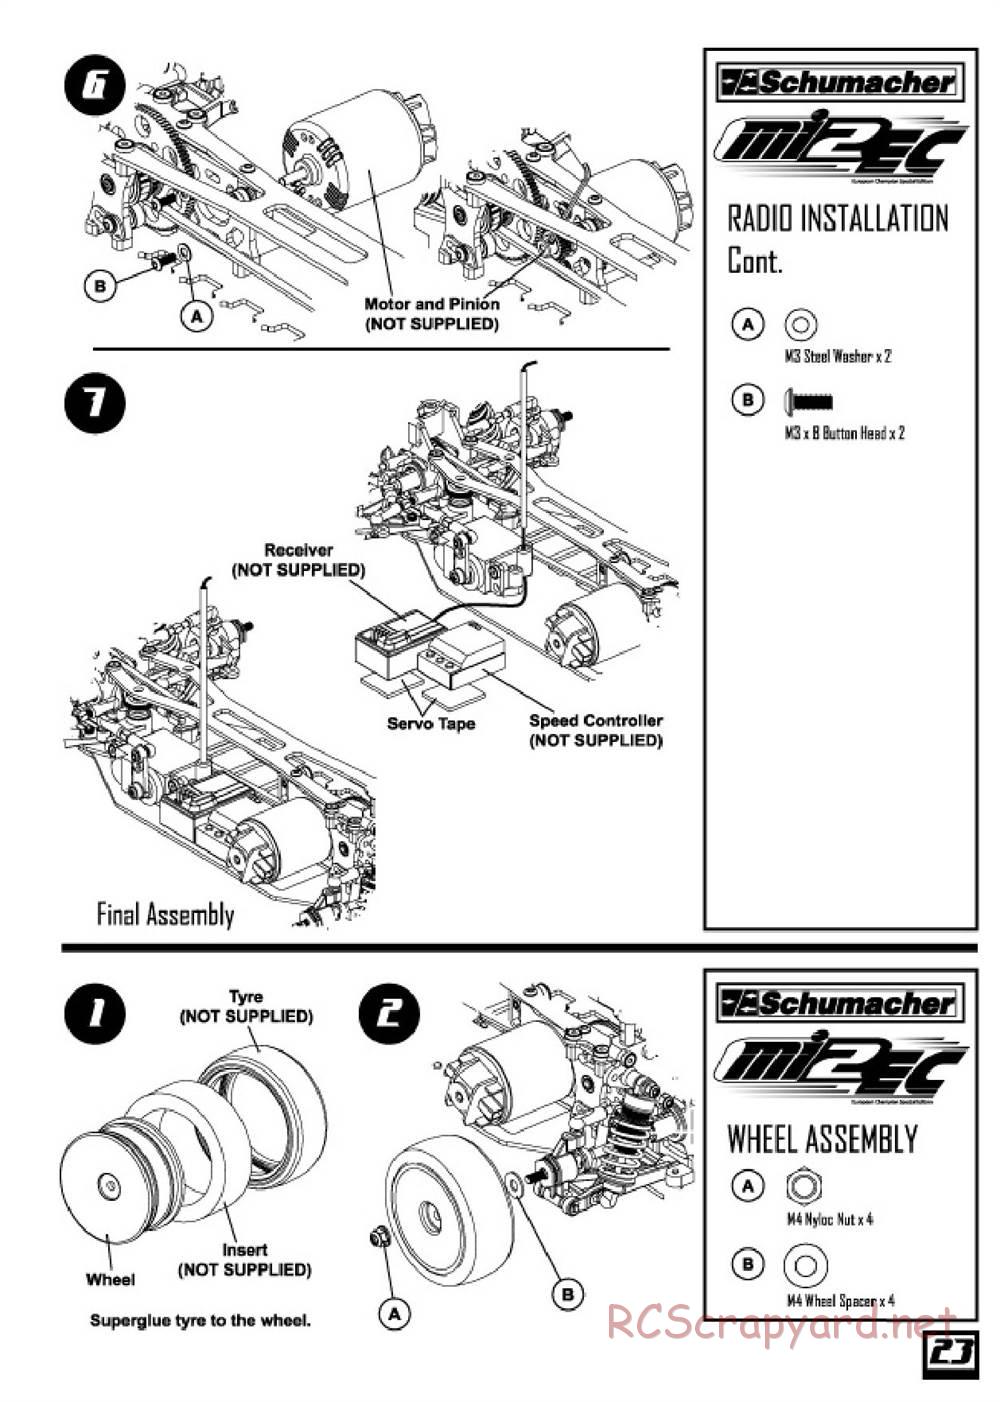 Schumacher - Mi2 EC - Manual - Page 25